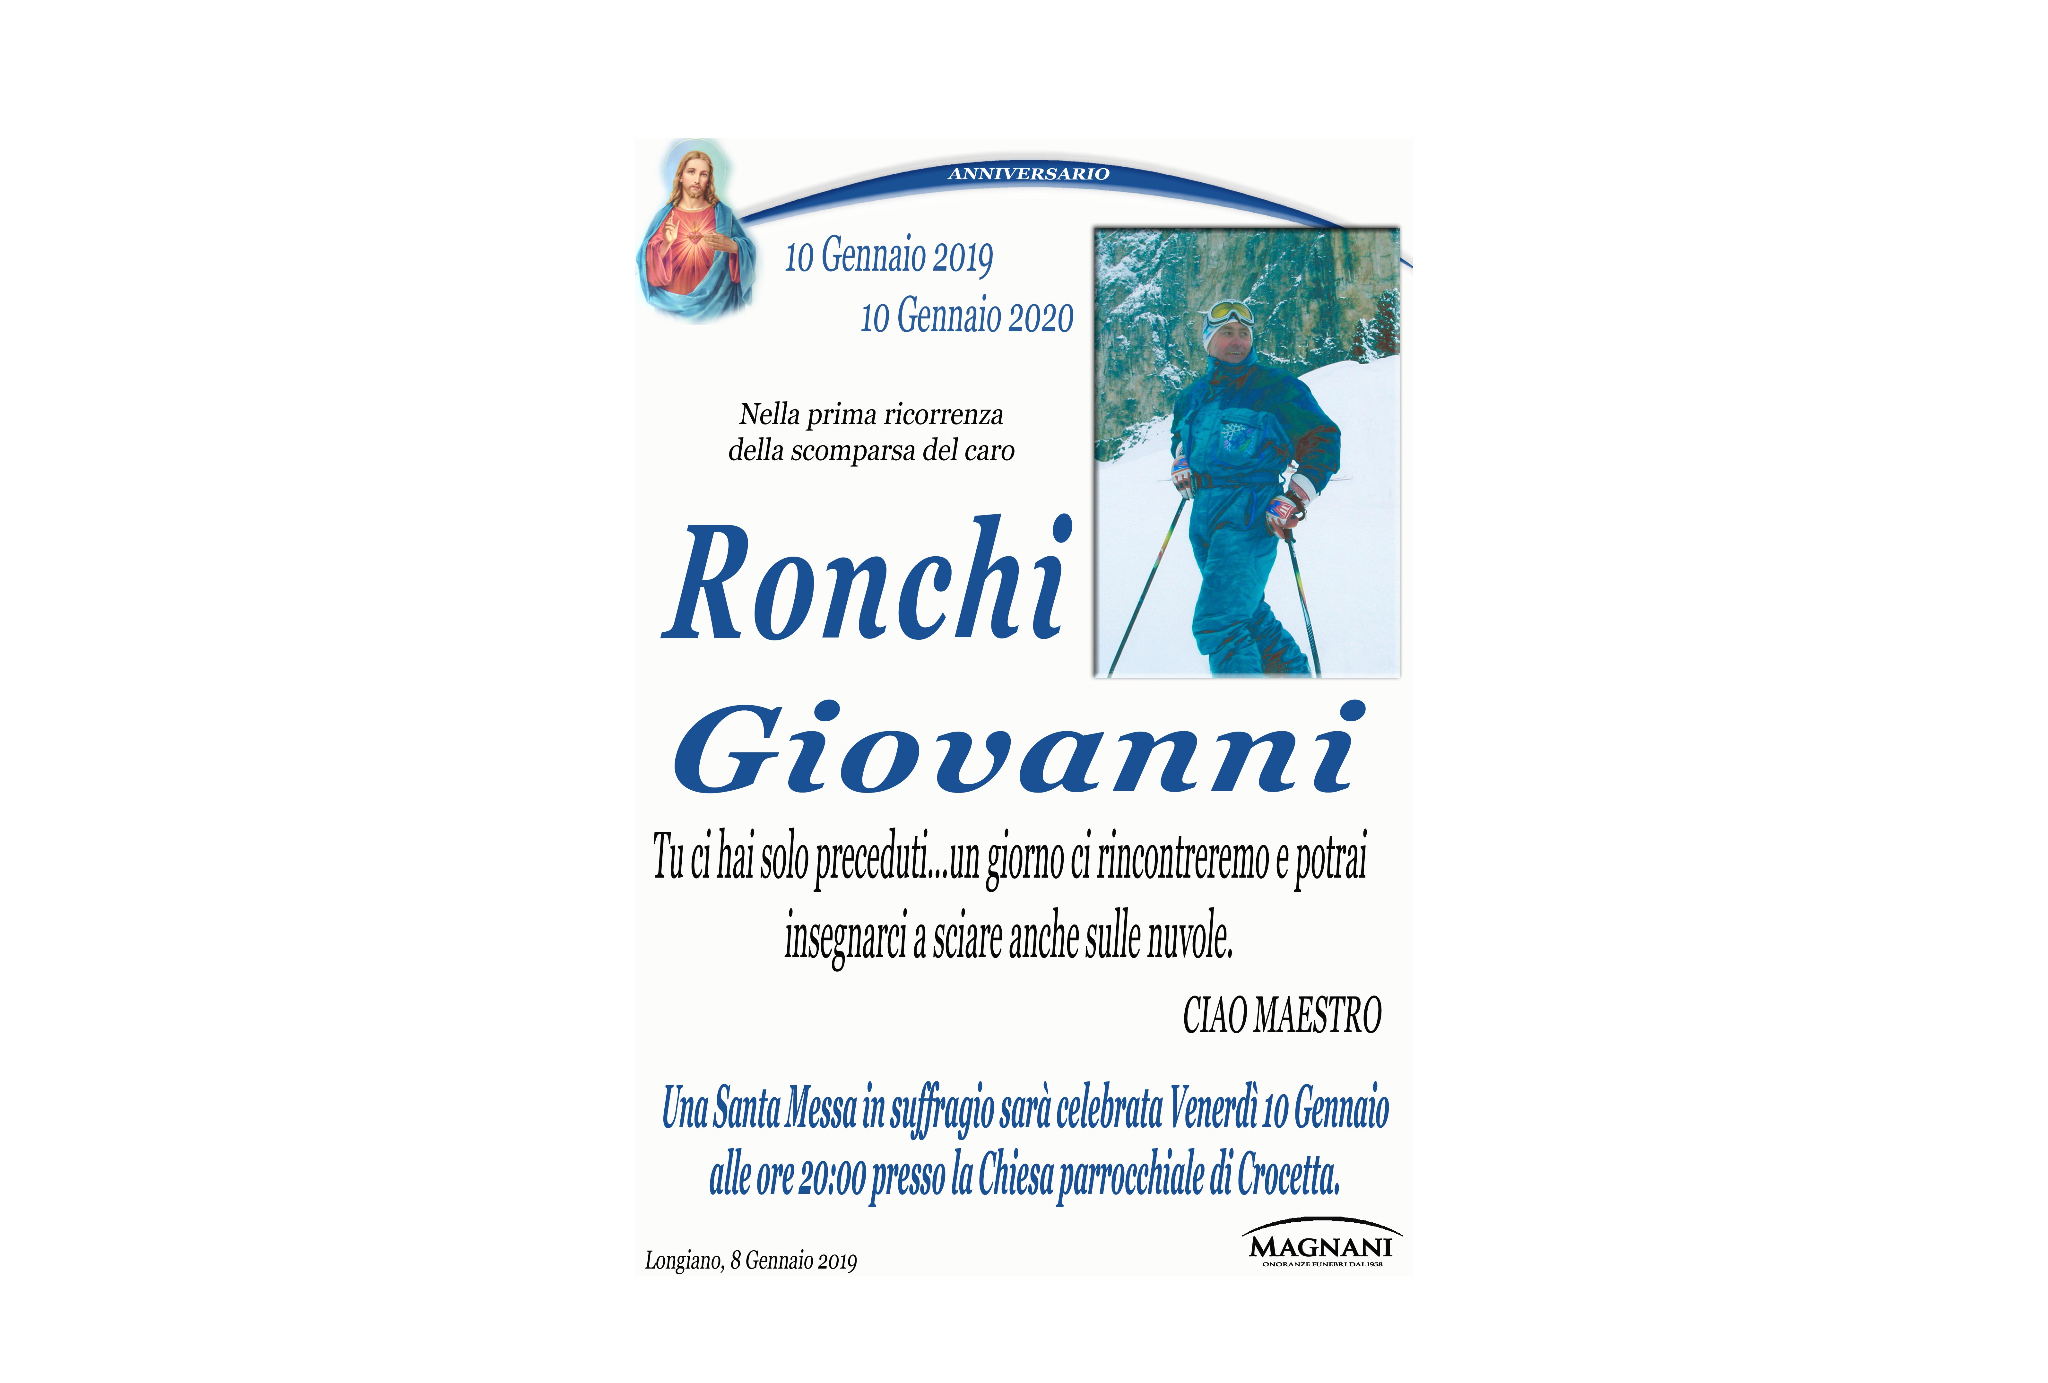 Giovanni Ronchi